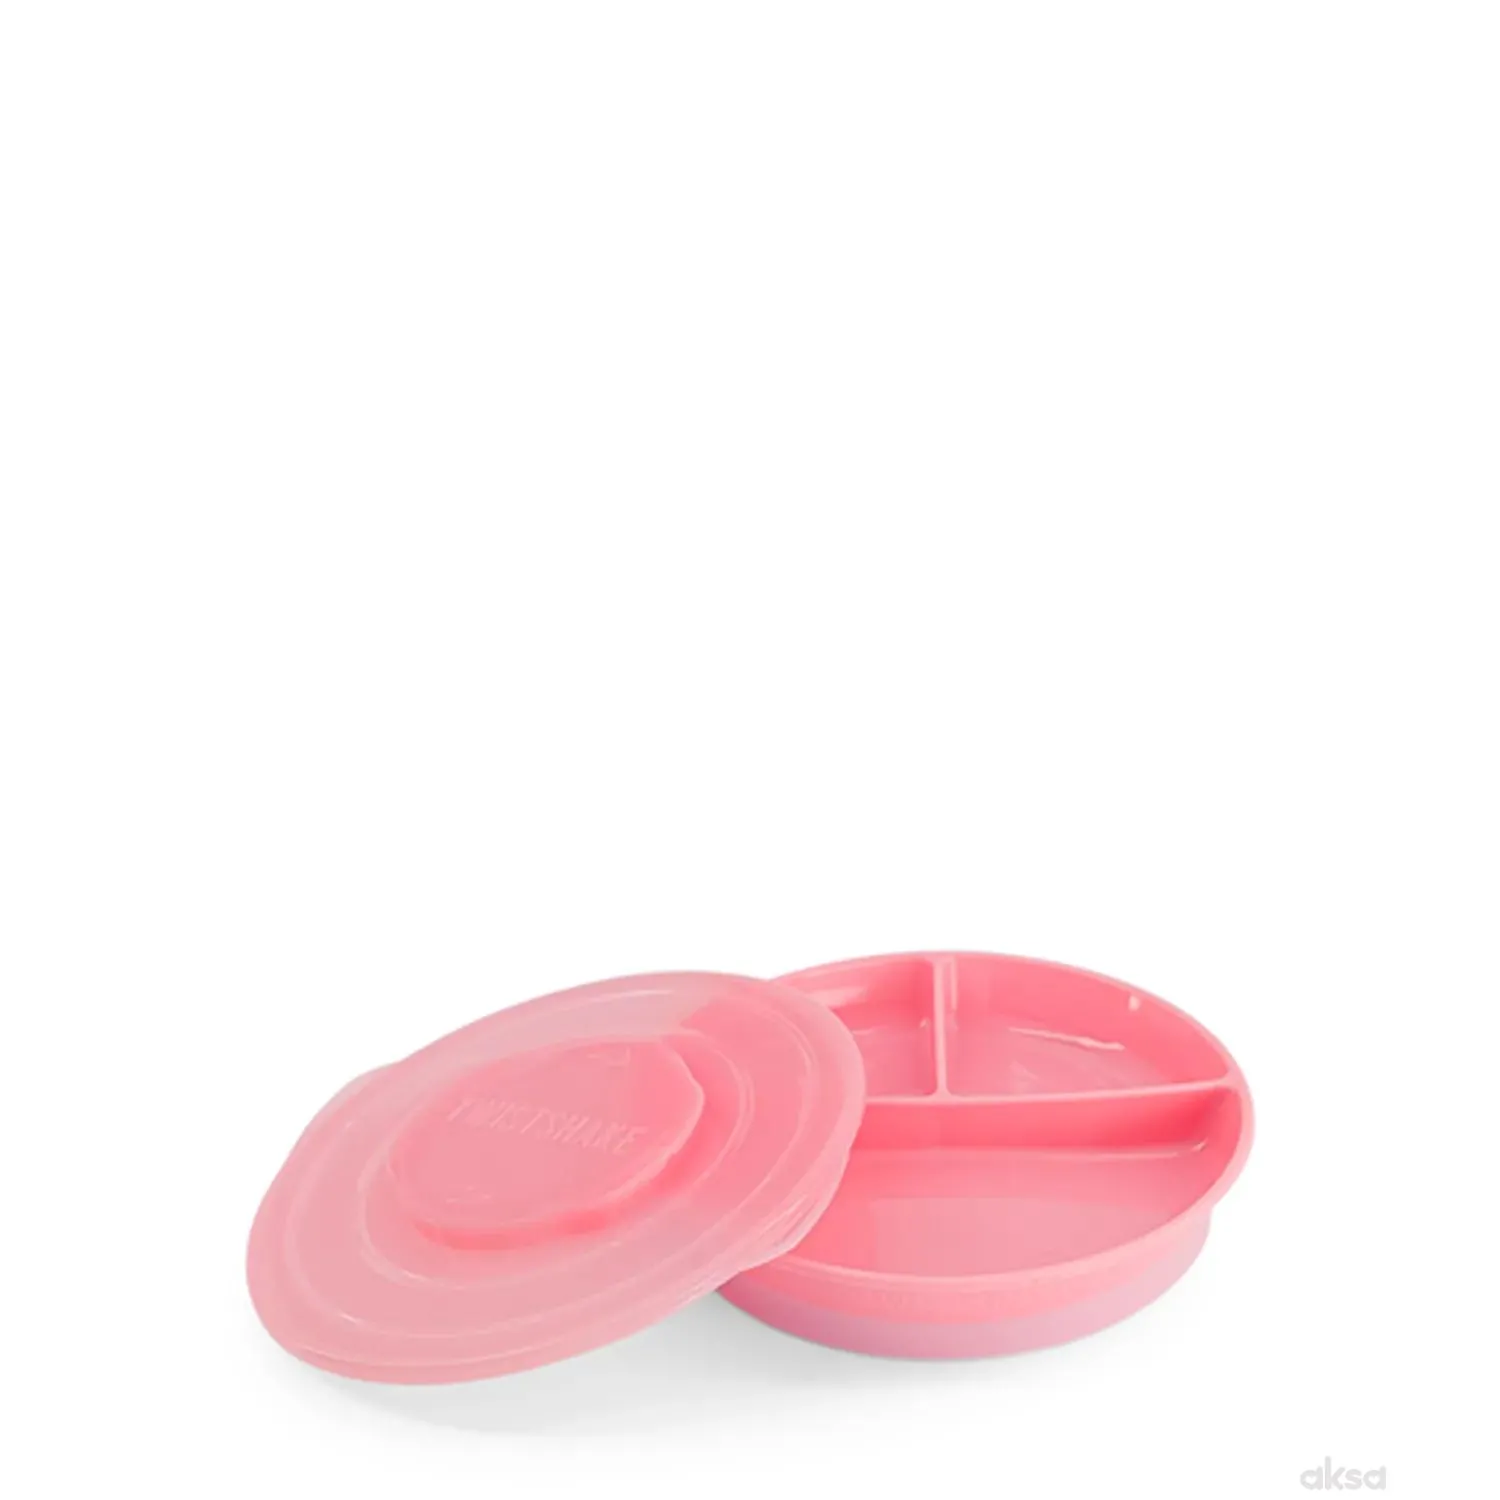 TS tanjir podeljeni 6m+ pastelna roze 